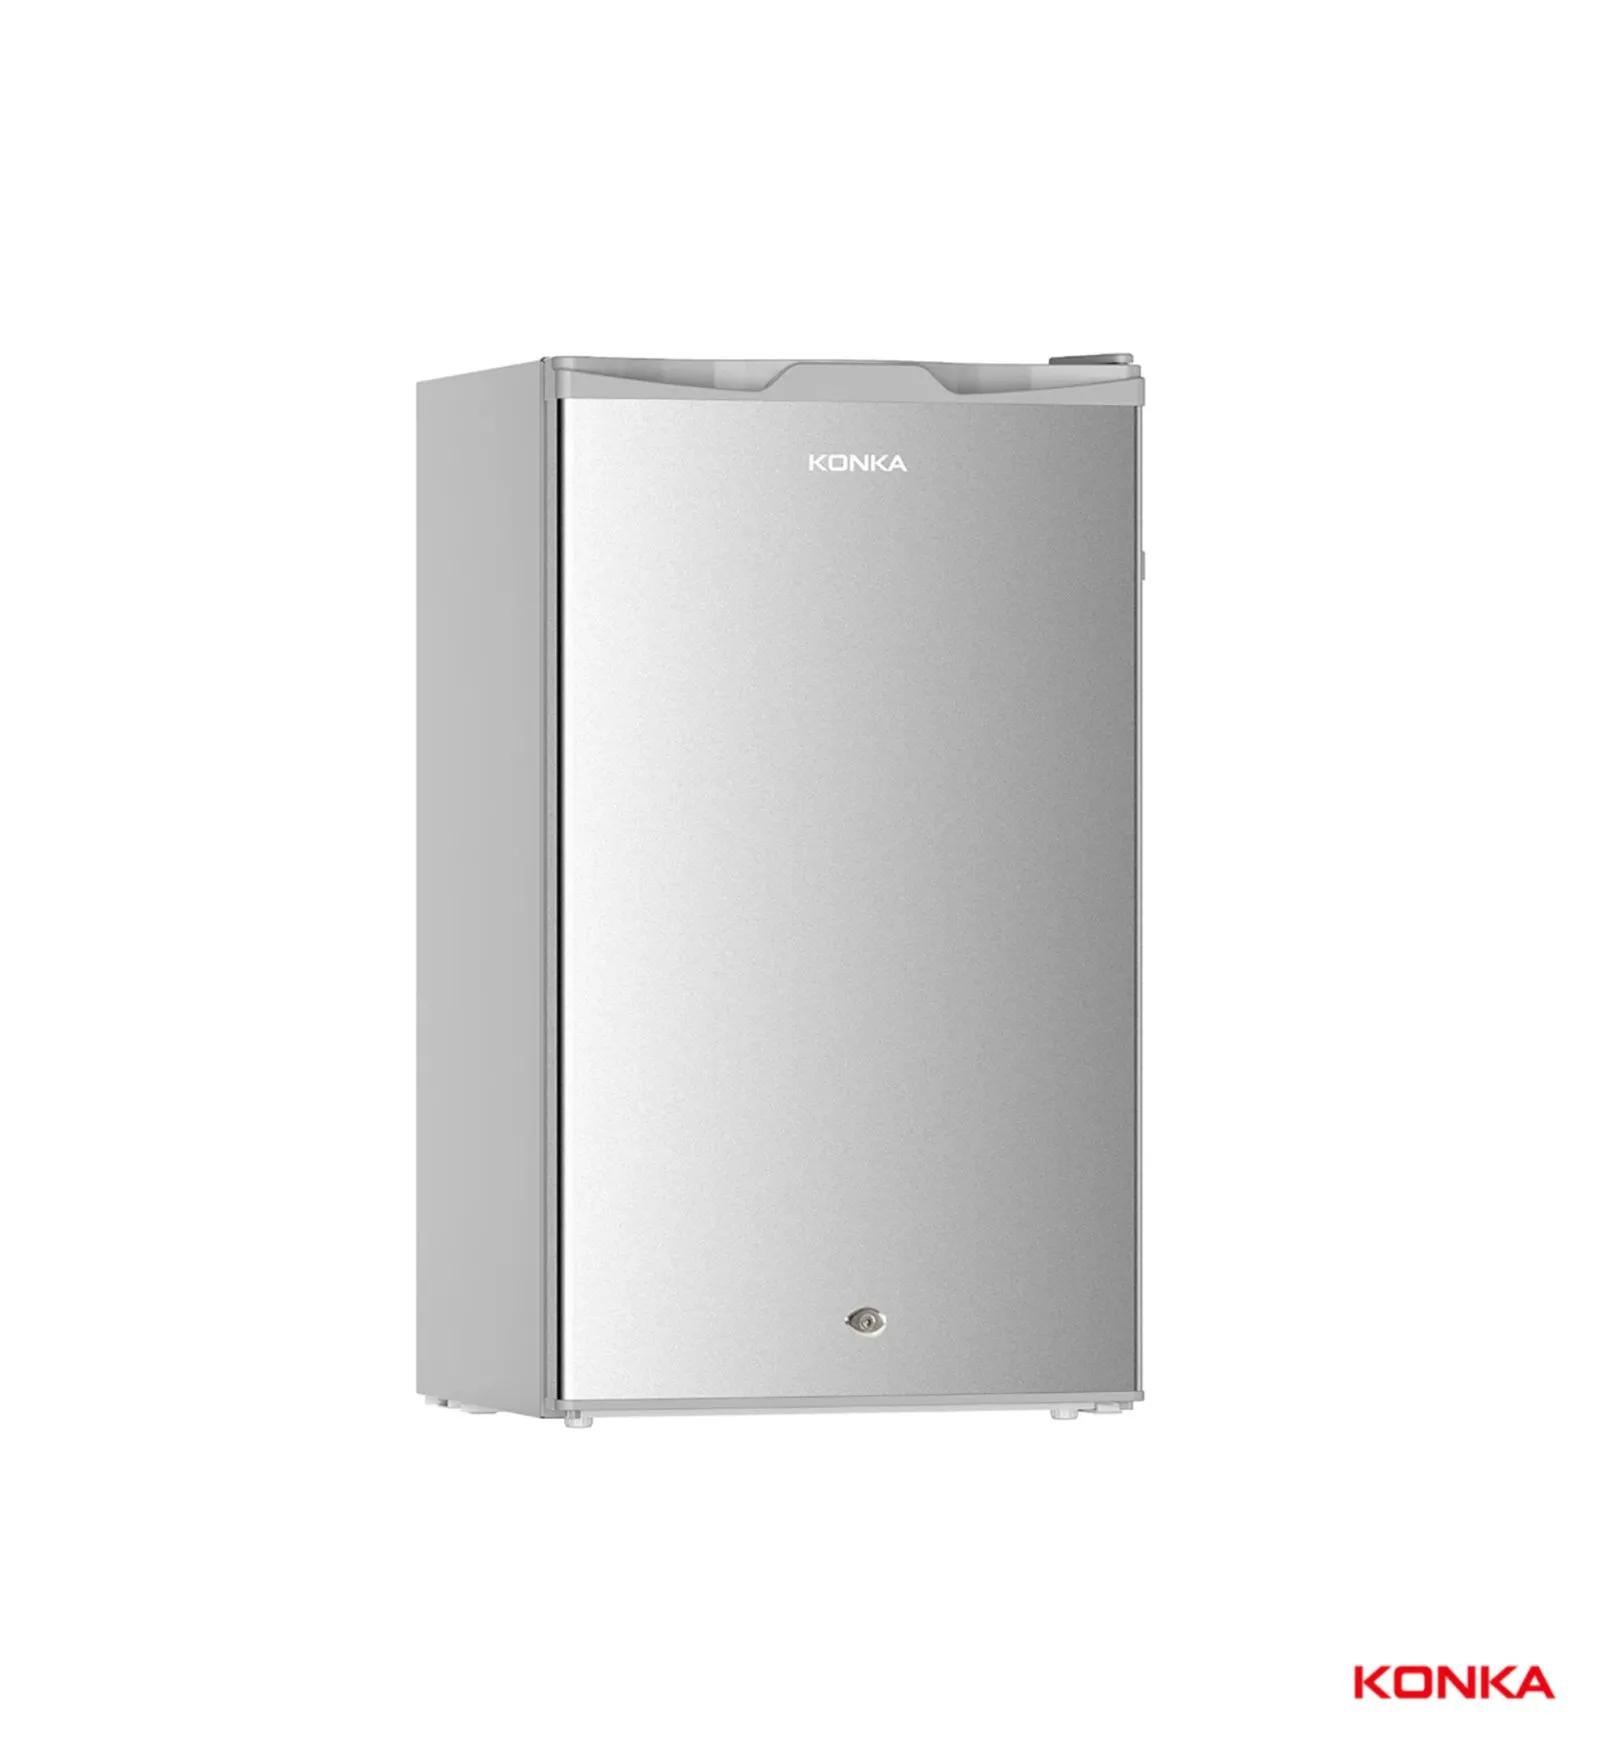 Konka 120 Liter Mini Refrigerator Single Door Color Silver Model KR120 | 1 Year Full 5 Compressor Warranty.